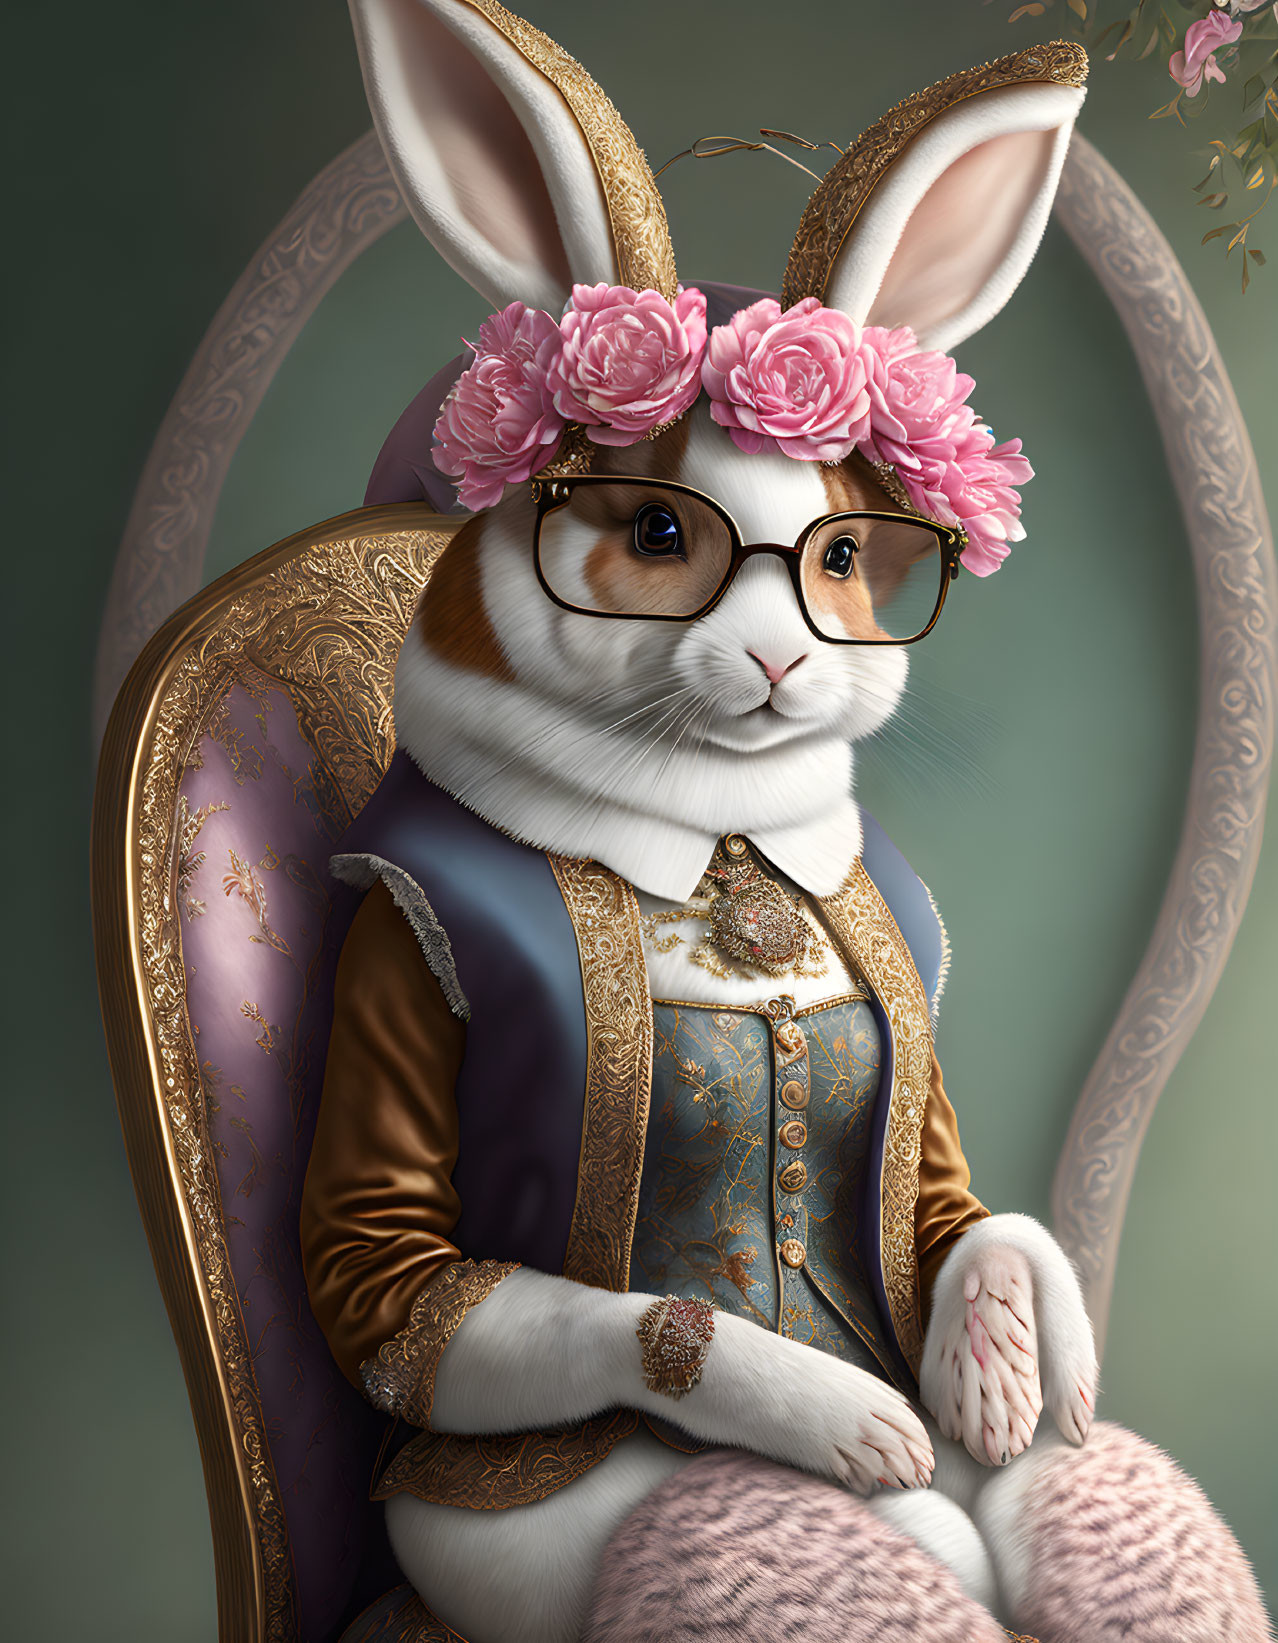 Mrs. Bunny